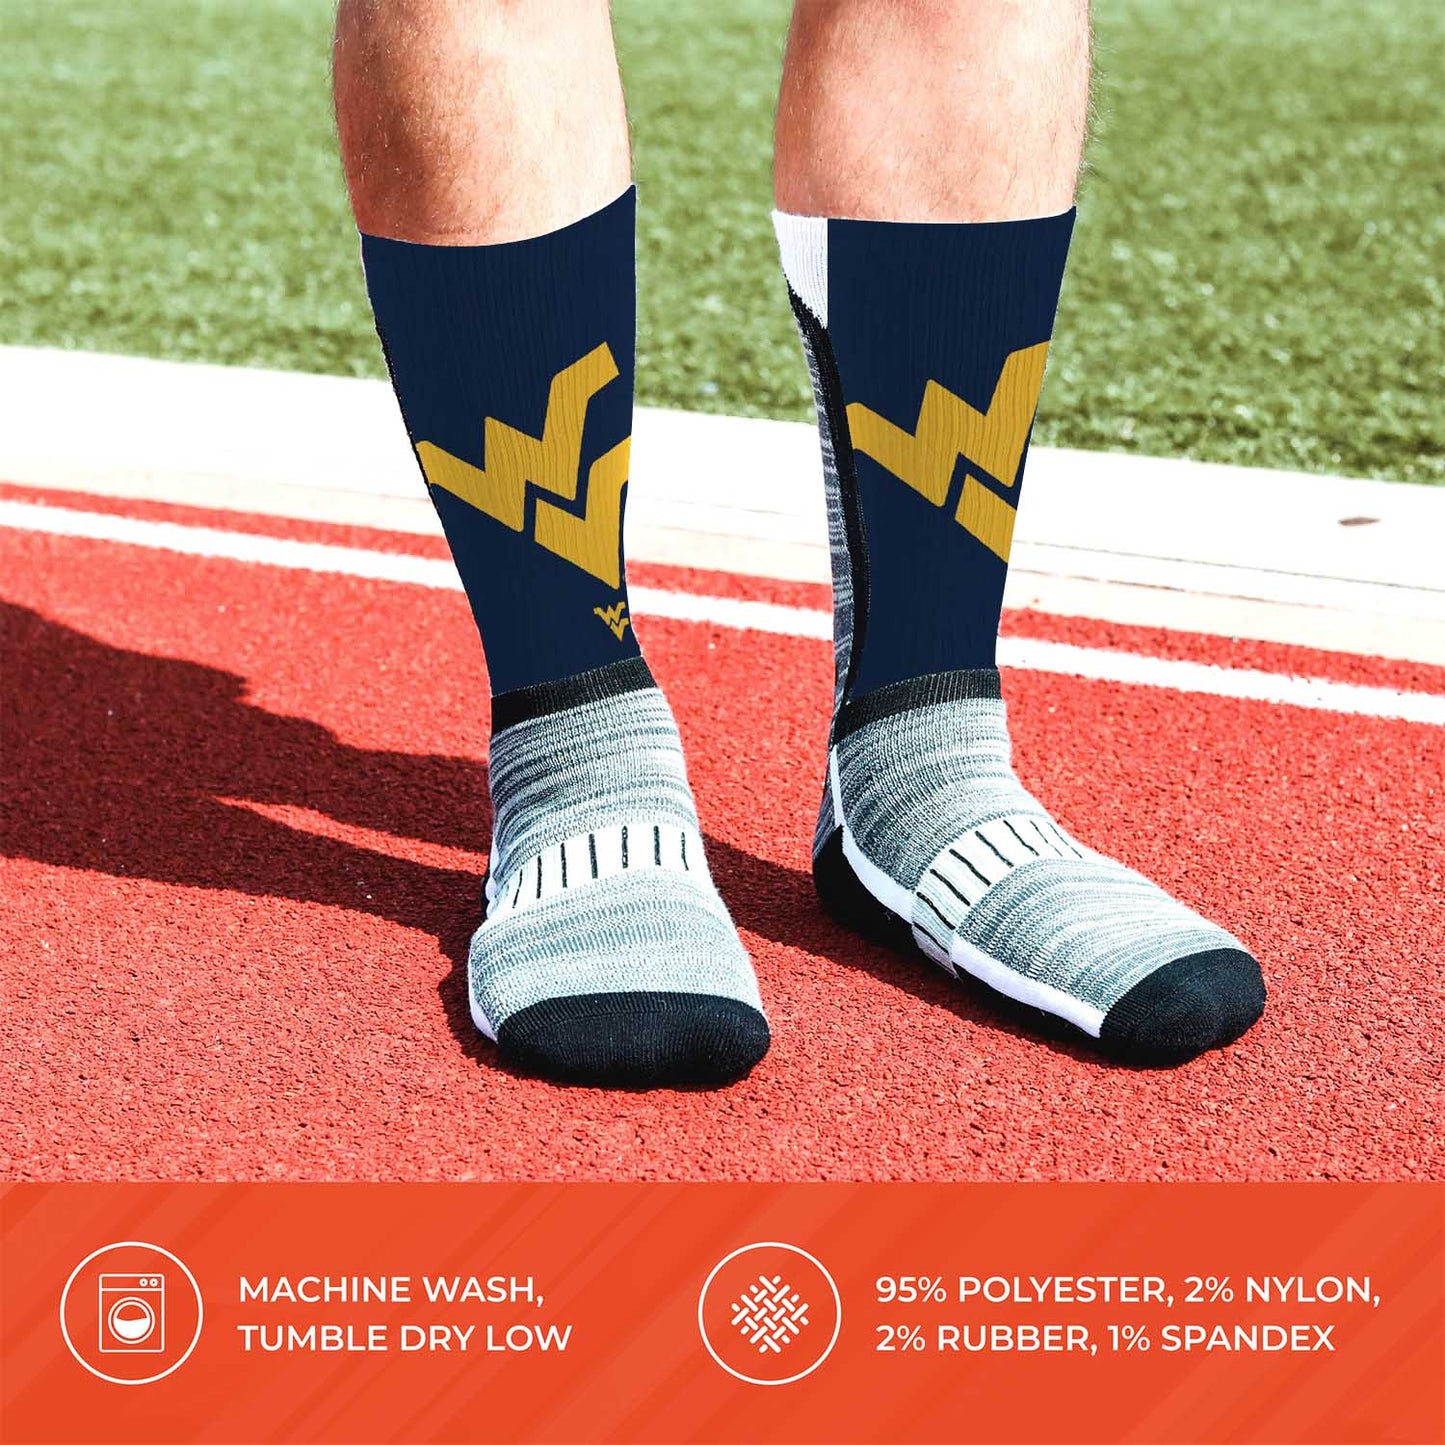 West Virginia Mountaineers NCAA Adult State and University Crew Socks - Navy